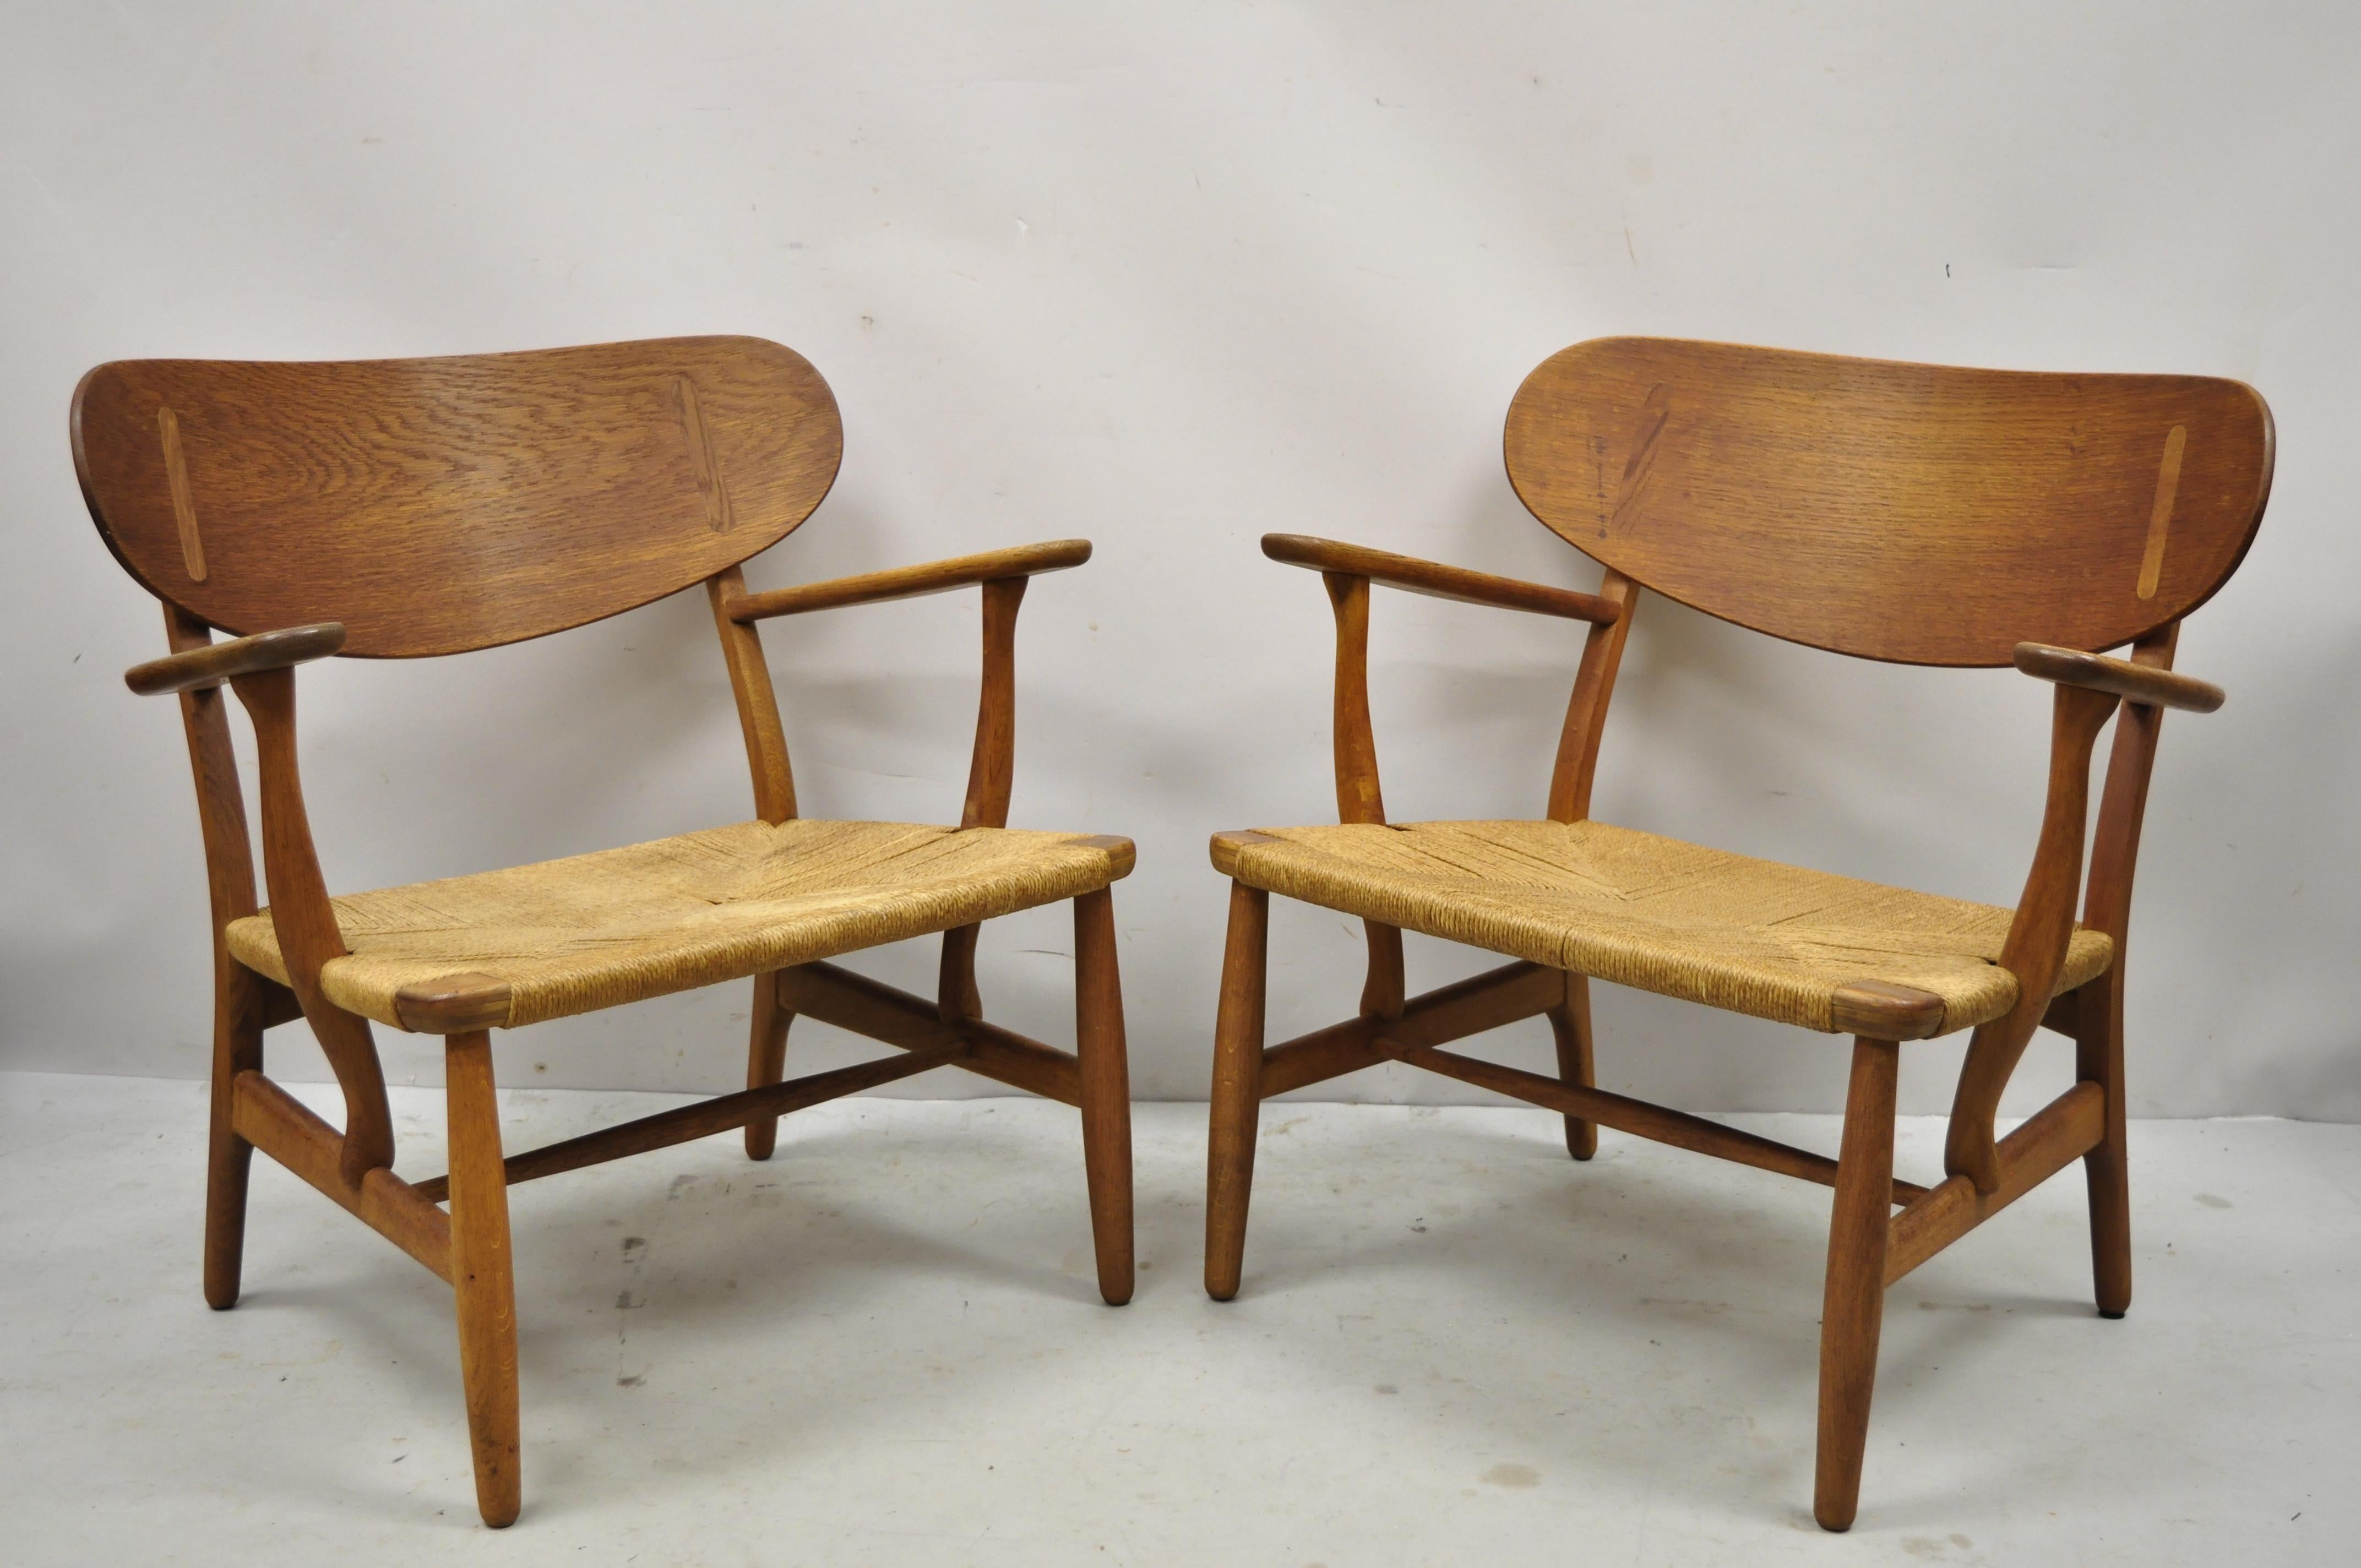 Vintage Hans Wegner CH22 Carl Hansen & Son Oak lounge easy chairs - a Pair. Item features woven paper cord seats, solid oakwood frames, original Hans Wegner stems to underside, quality Danish craftsmanship. Measurements: 28.5